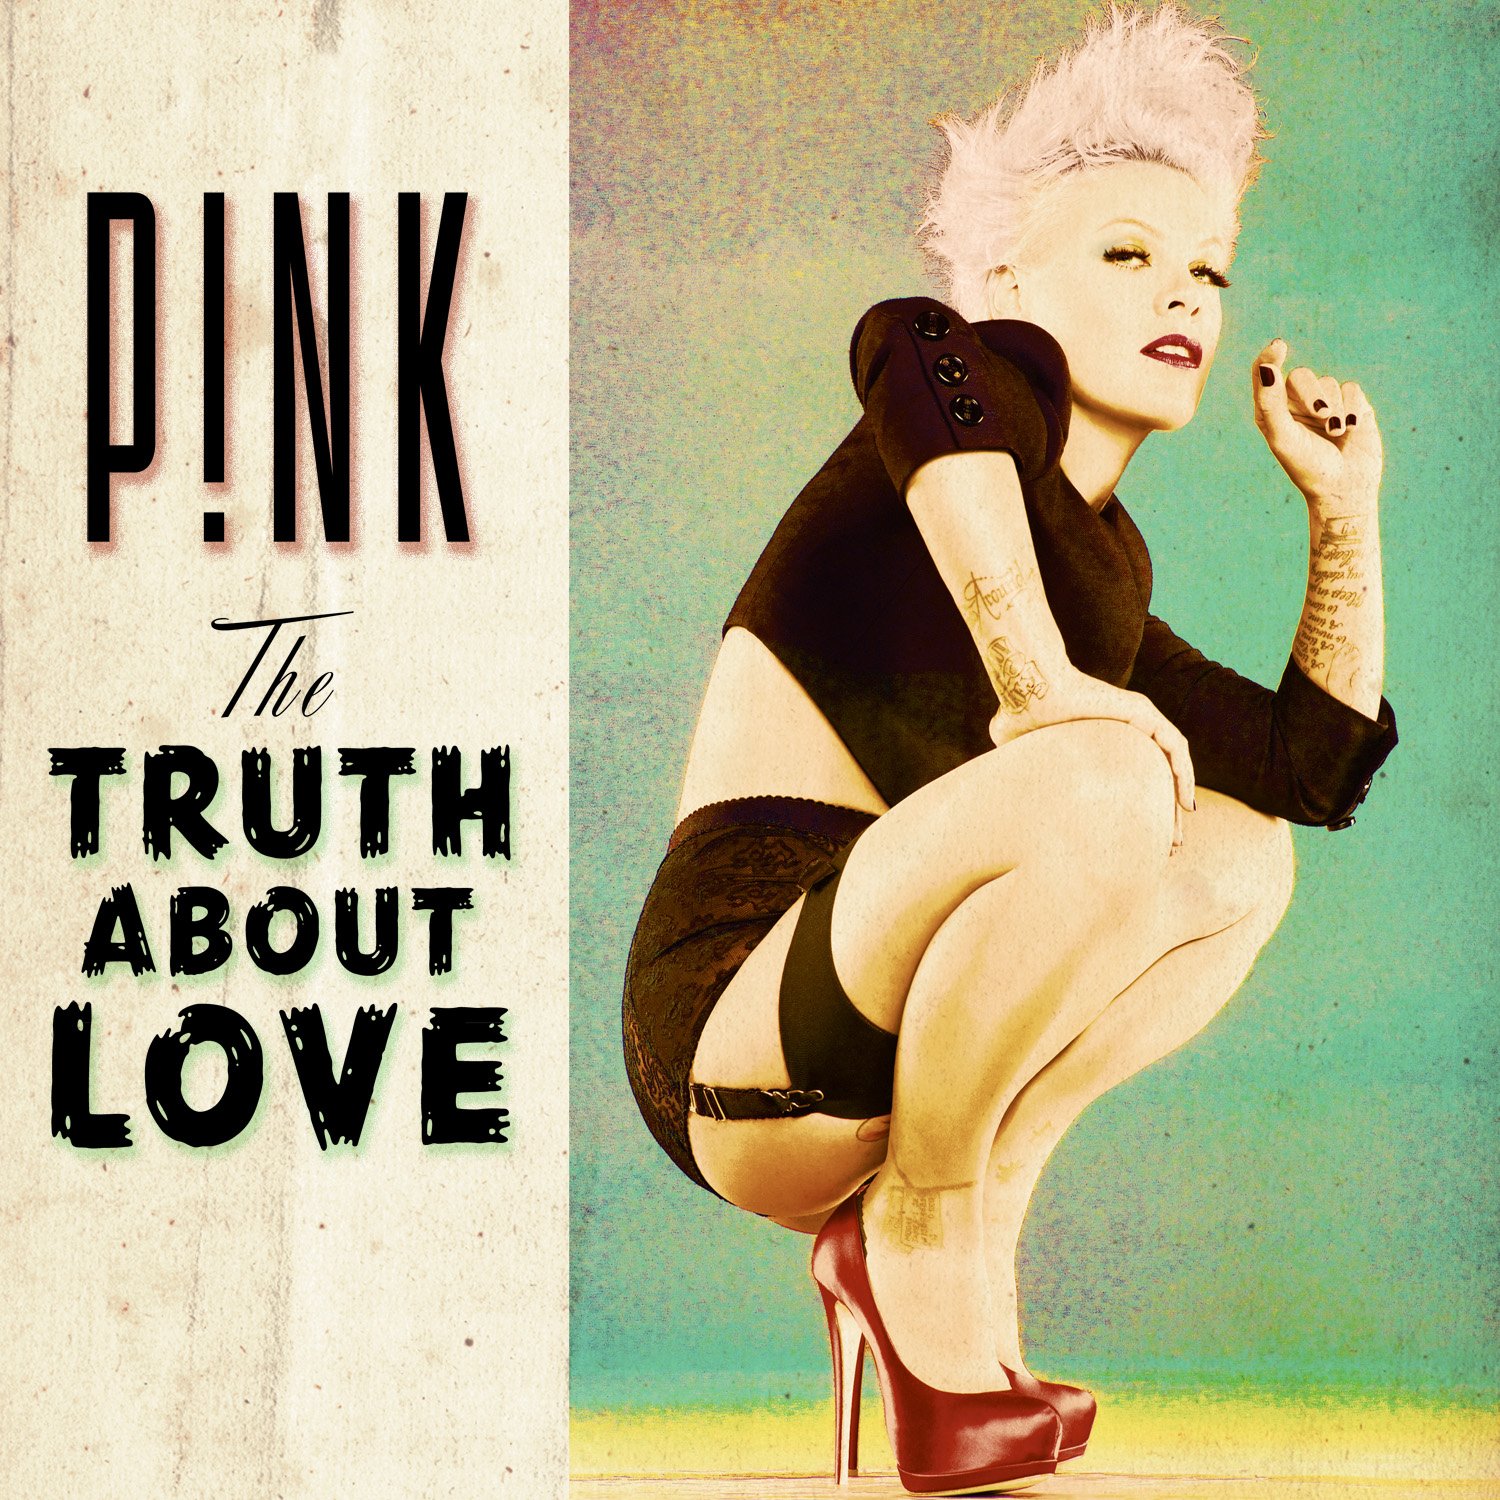 http://4.bp.blogspot.com/-sWXglvjHrZo/UFW9UD66S9I/AAAAAAAAE4g/iW9lInxBk8U/s1600/pink+the+truth+about+love.jpg